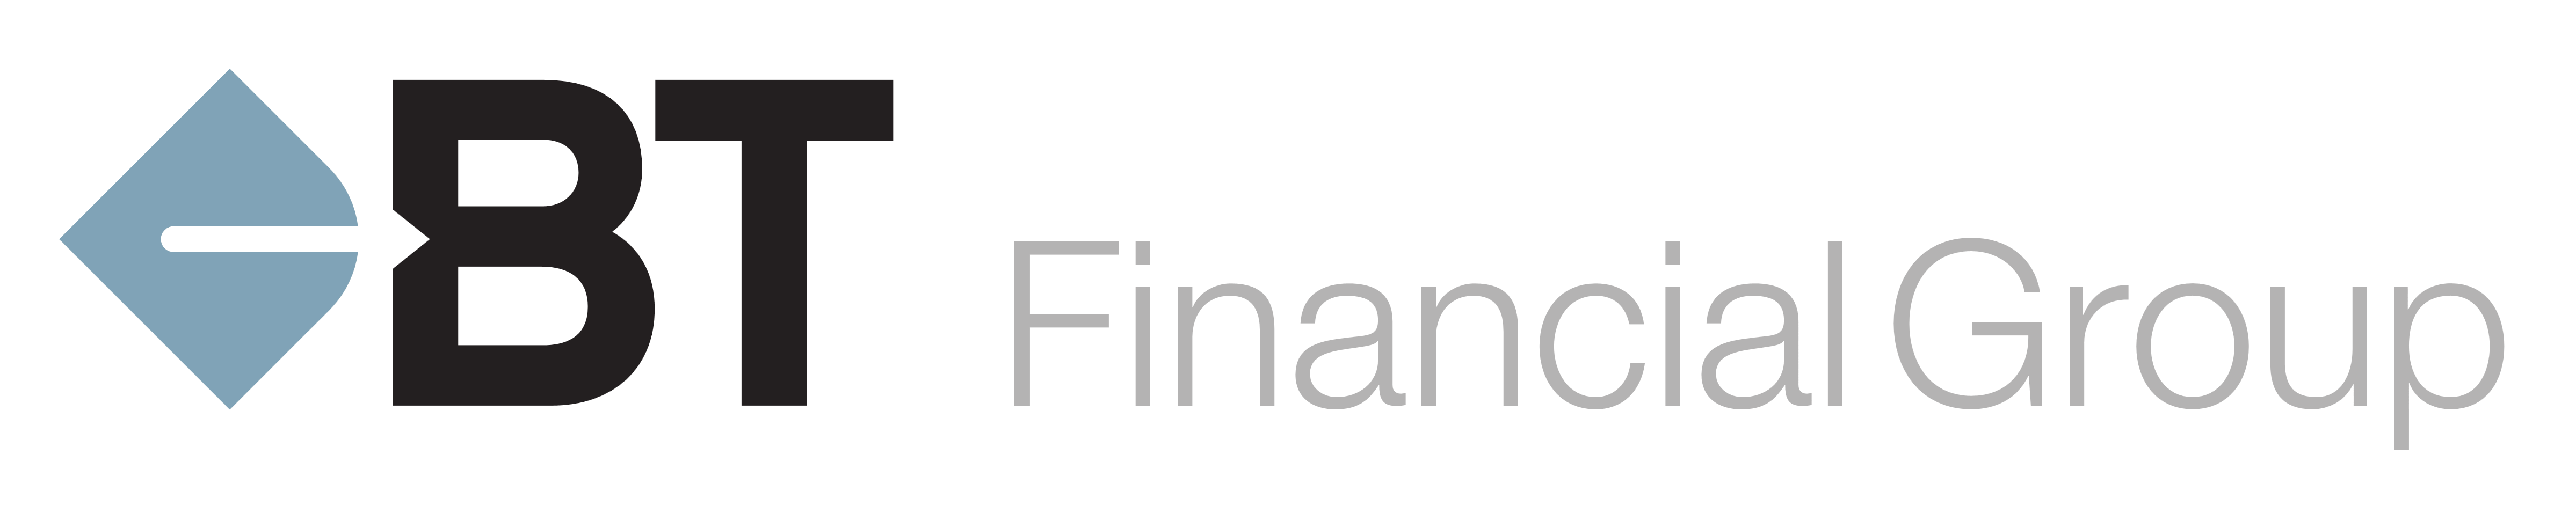 bt-financial-group-logos-download